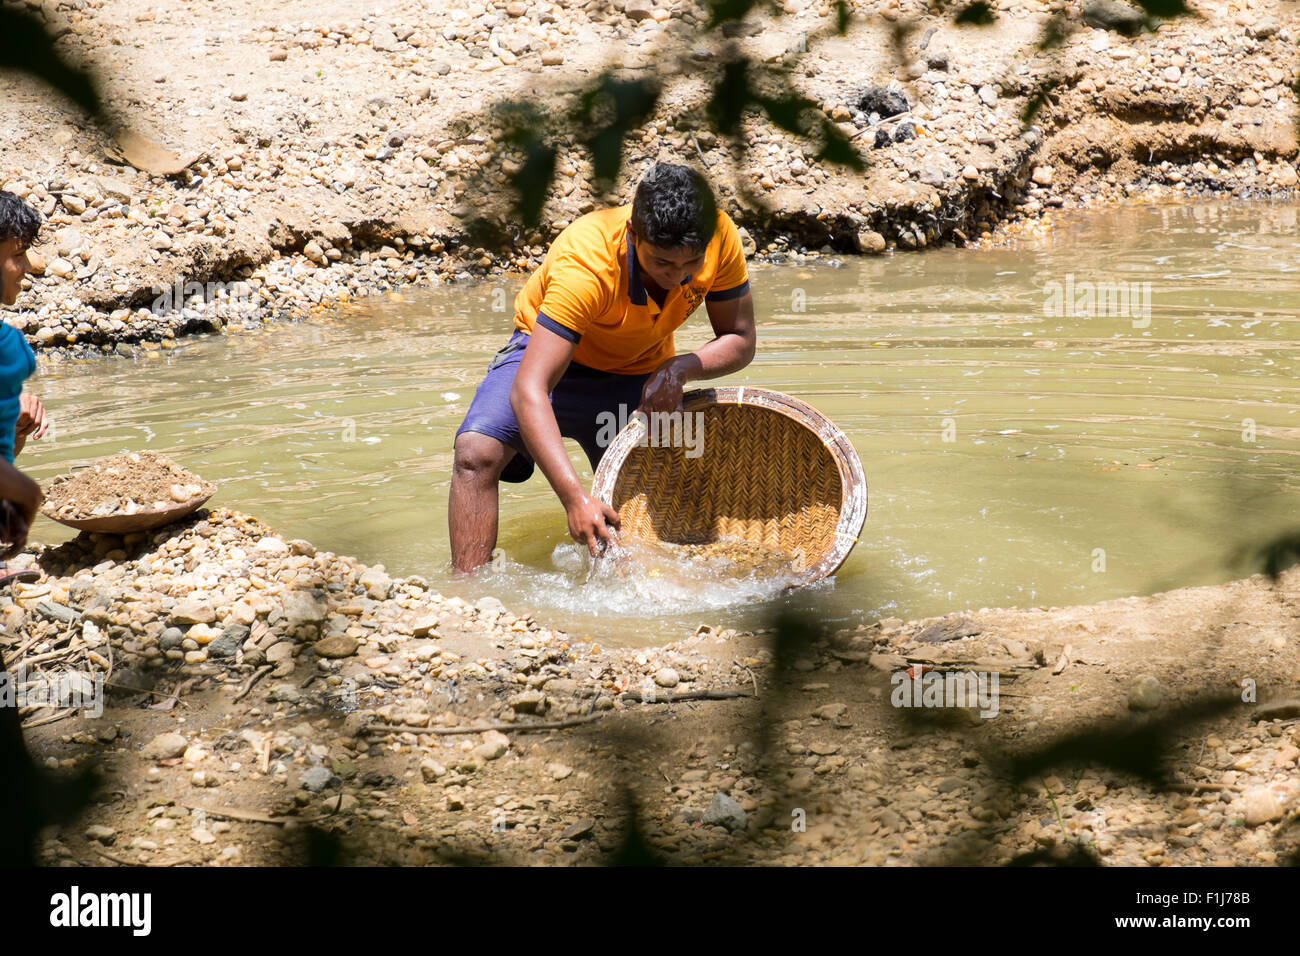 Illegal gem prospectors panning for gemstones in the gravel deposits of a river in Uva province, Sri Lanka. Stock Photo